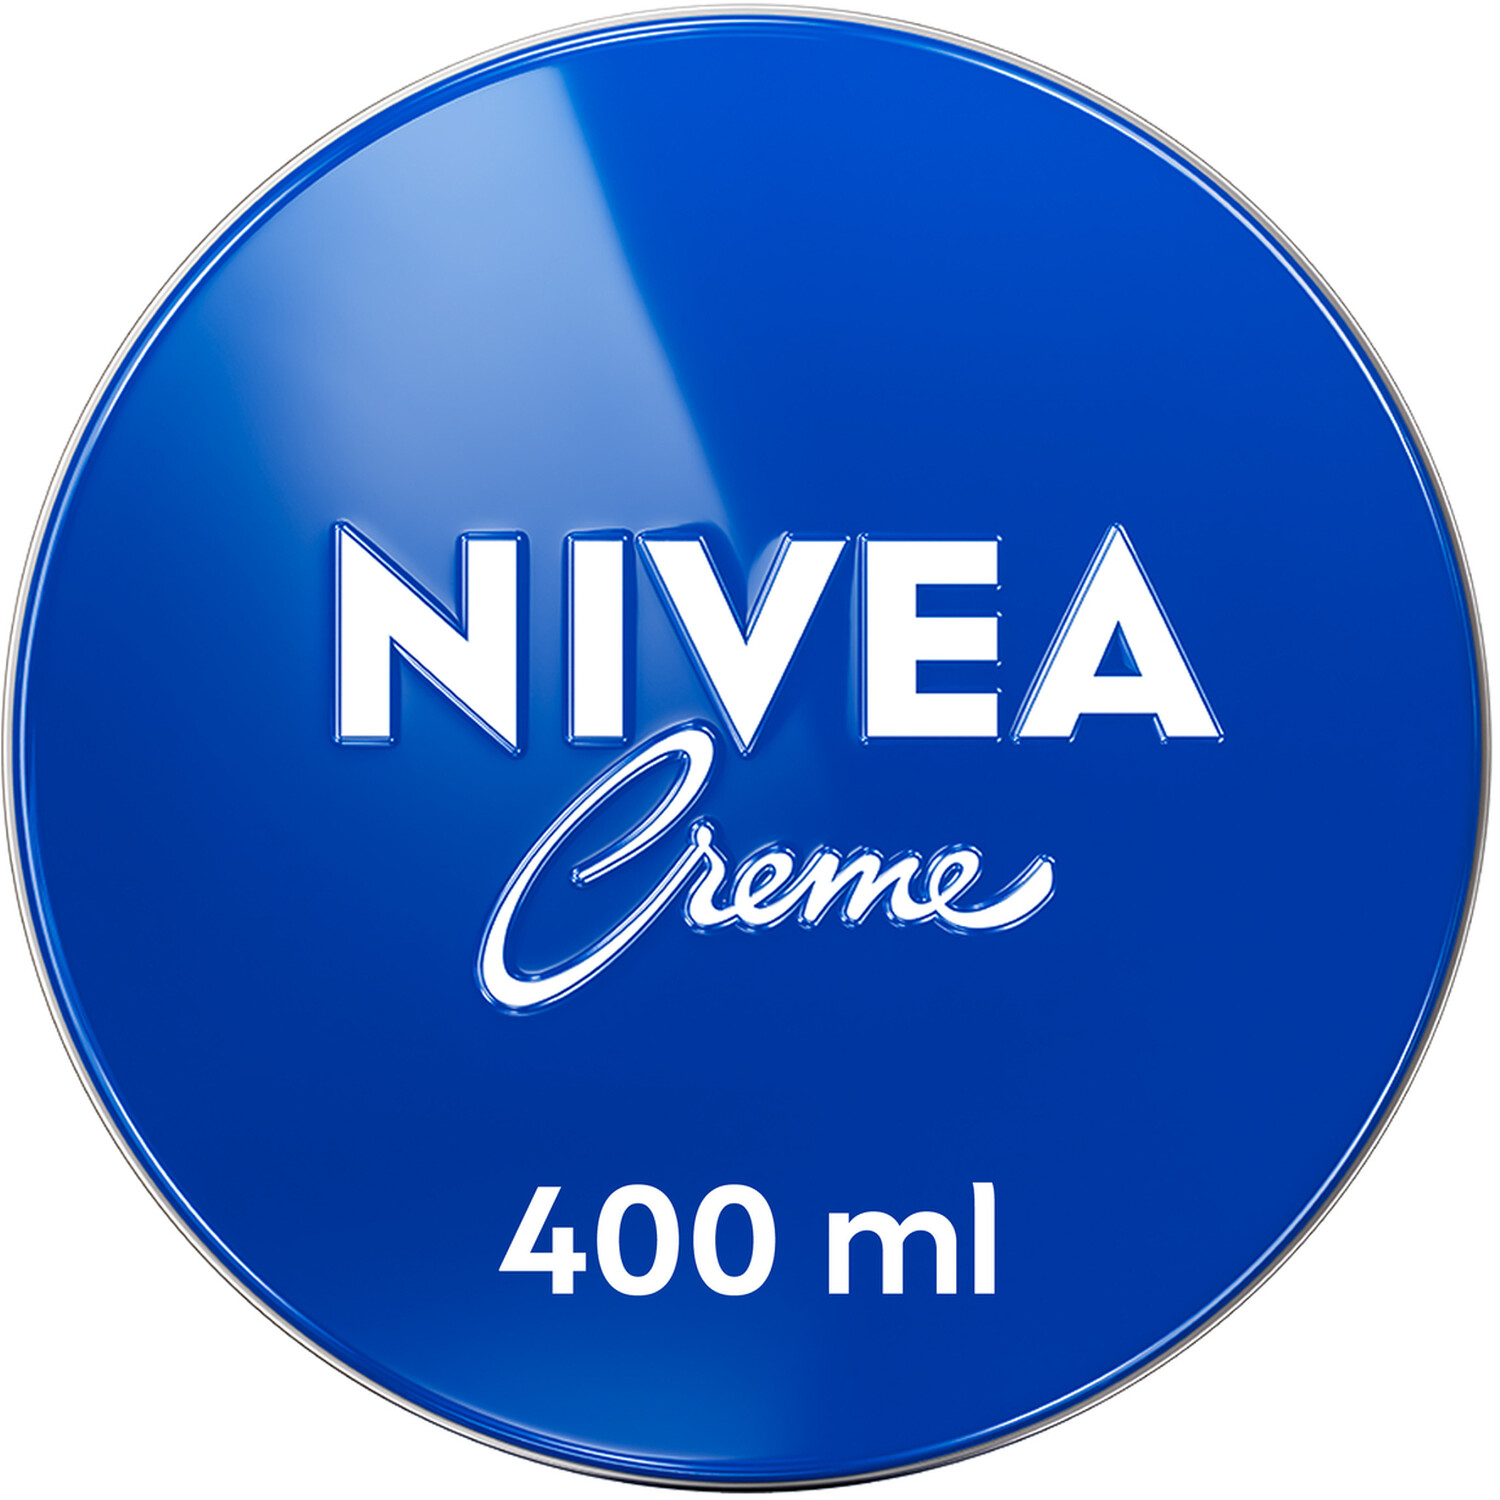 Nivea Creme 400ml - Blue Image